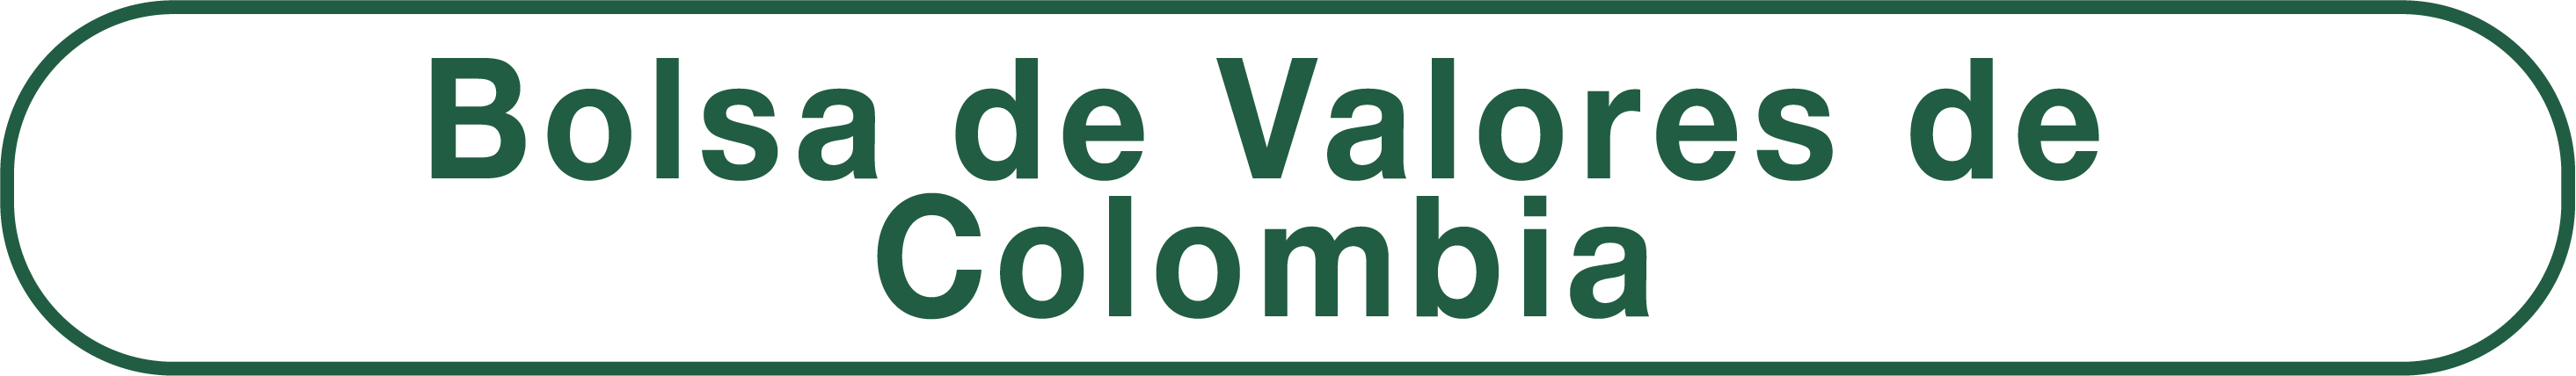 BOLSA DE VALORES DE COLOMBIA.png